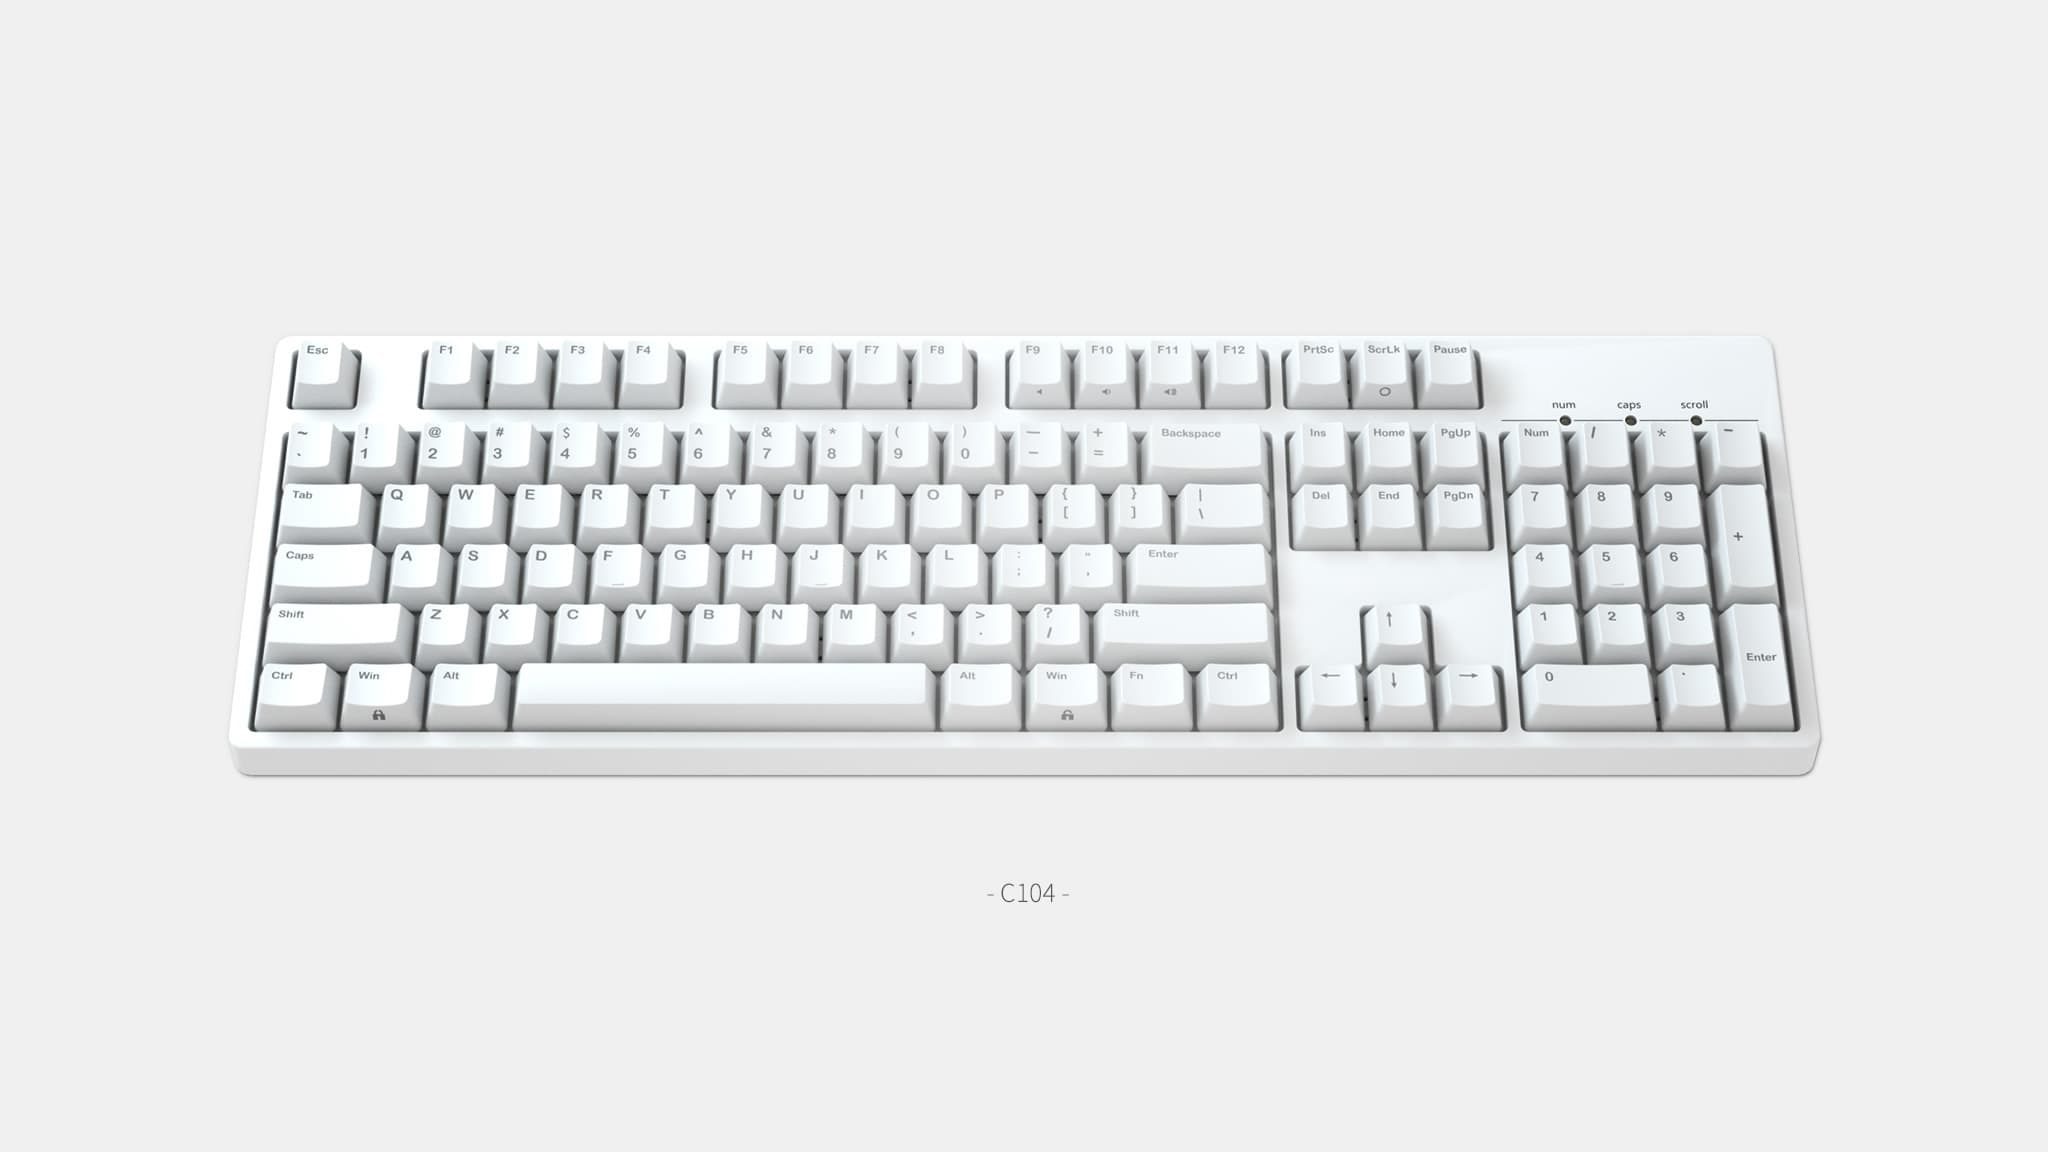 IKBC C104 Keyboard VS IKBC C210 Keyboard: Which Better?